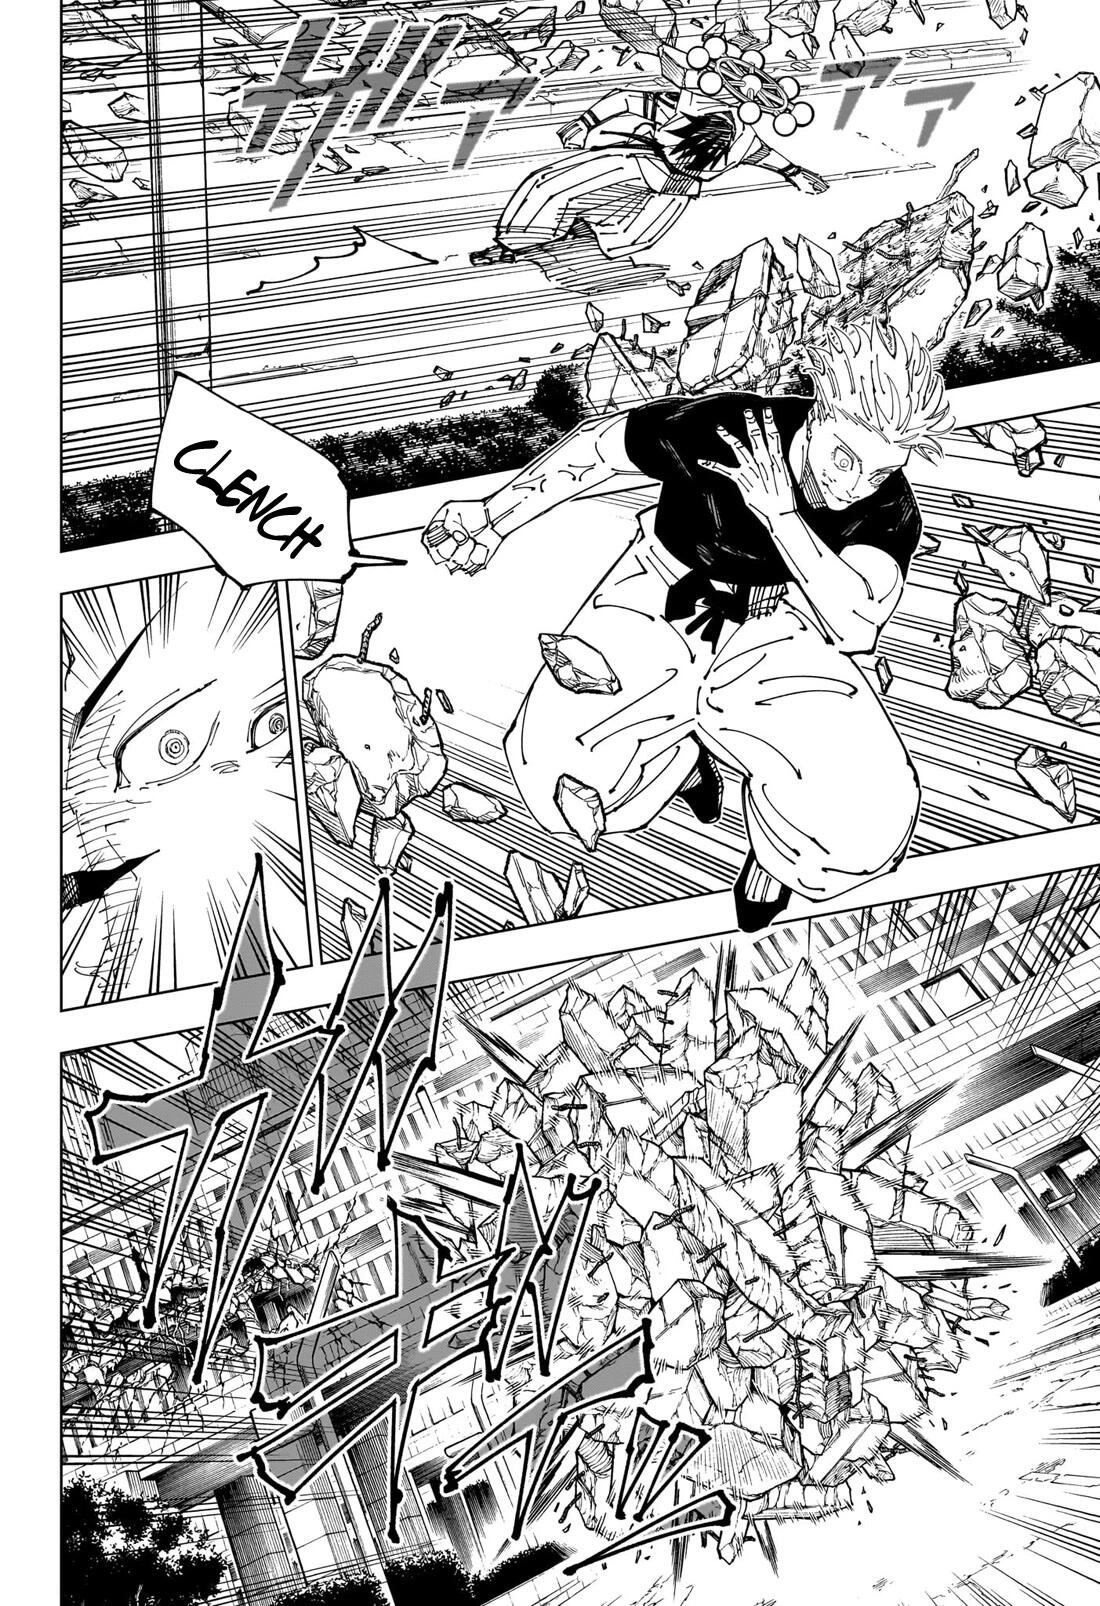 Jujutsu Kaisen Chapter 231: The Decisive Battle In The Uninhabited, Demon-Infested Shinjuku ⑨ page 6 - Mangakakalot